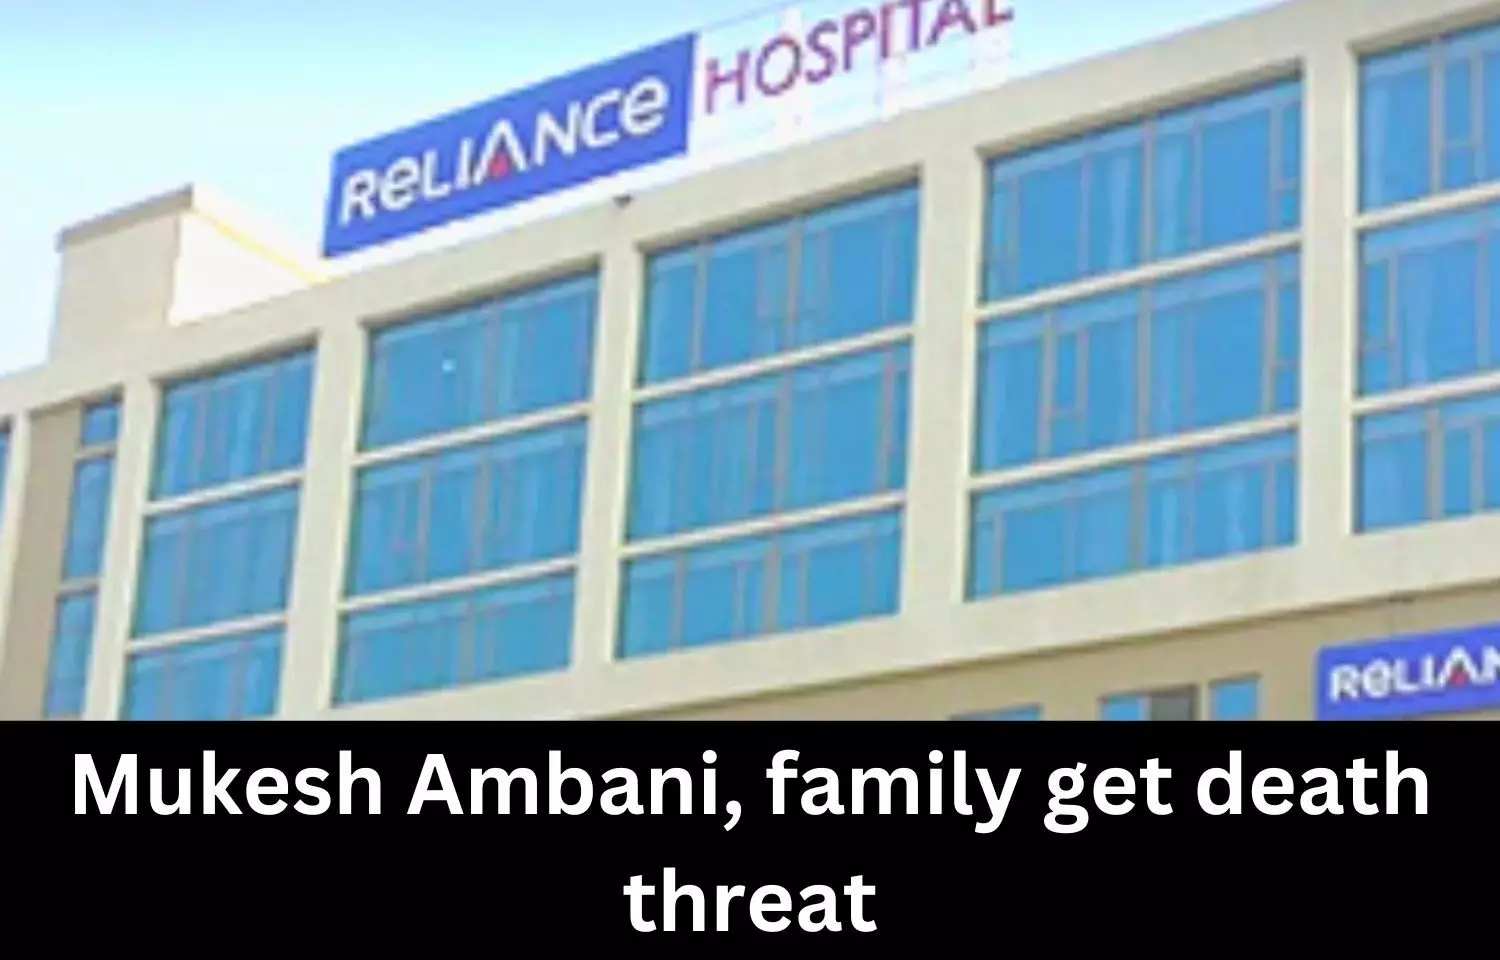 Mukesh Ambani, family get death threat, caller threatens to blow up Reliance hospital in Mumbai